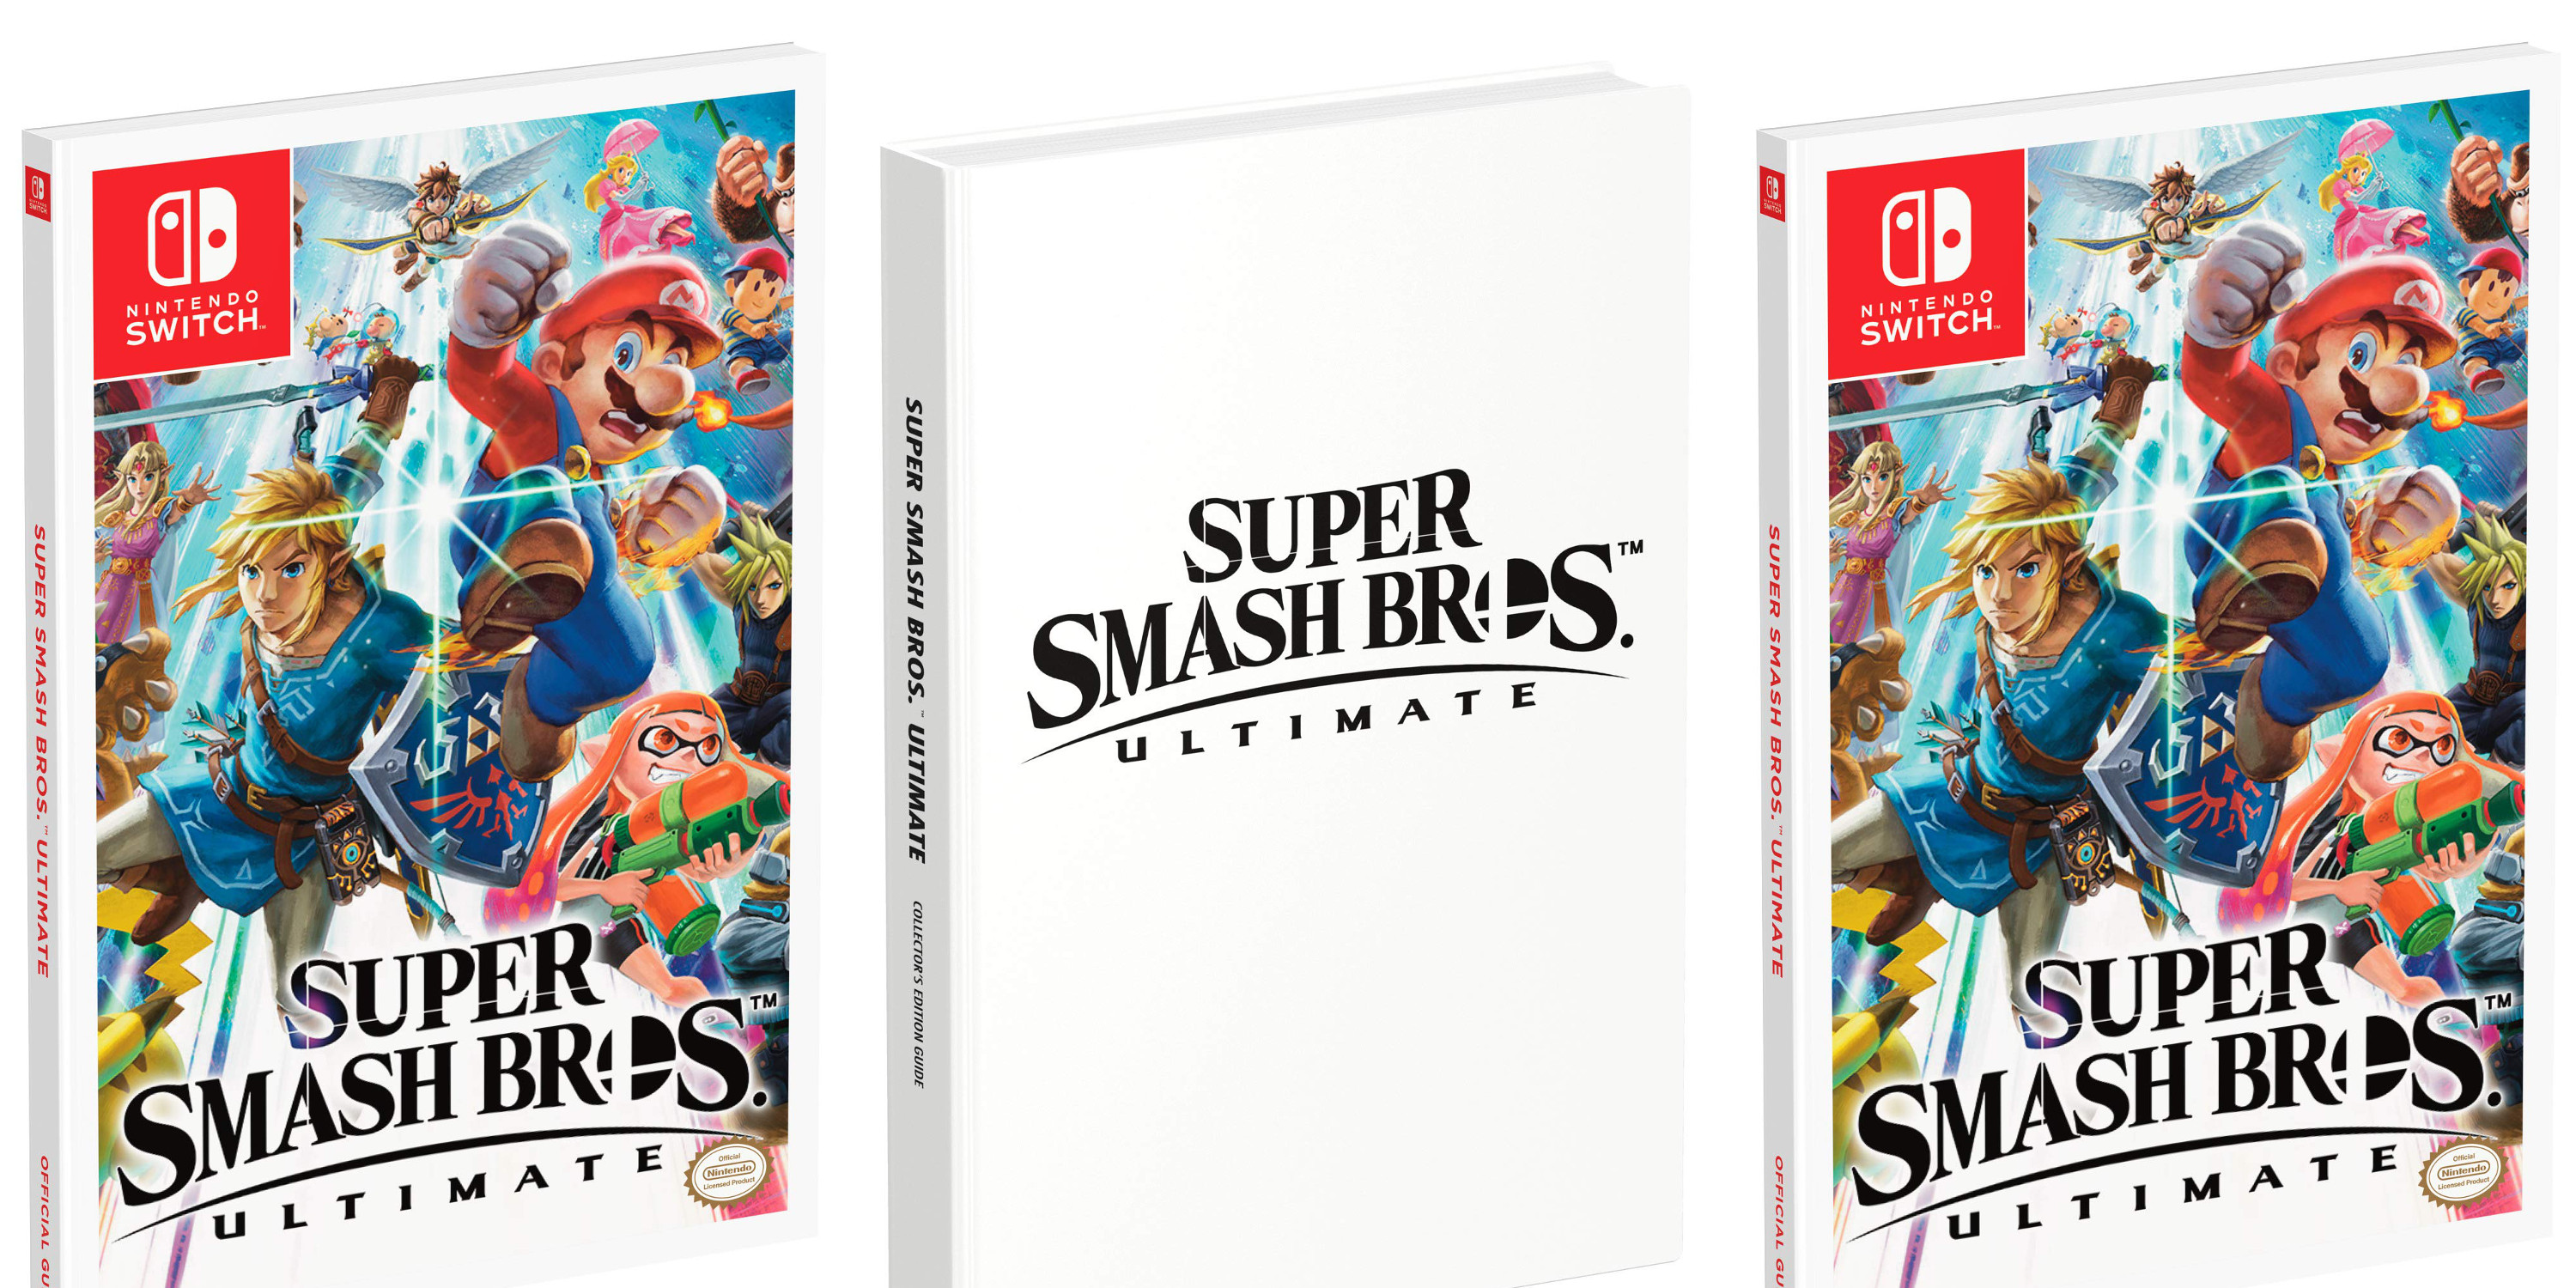 Super Smash Bros. Ultimate pre-order deals